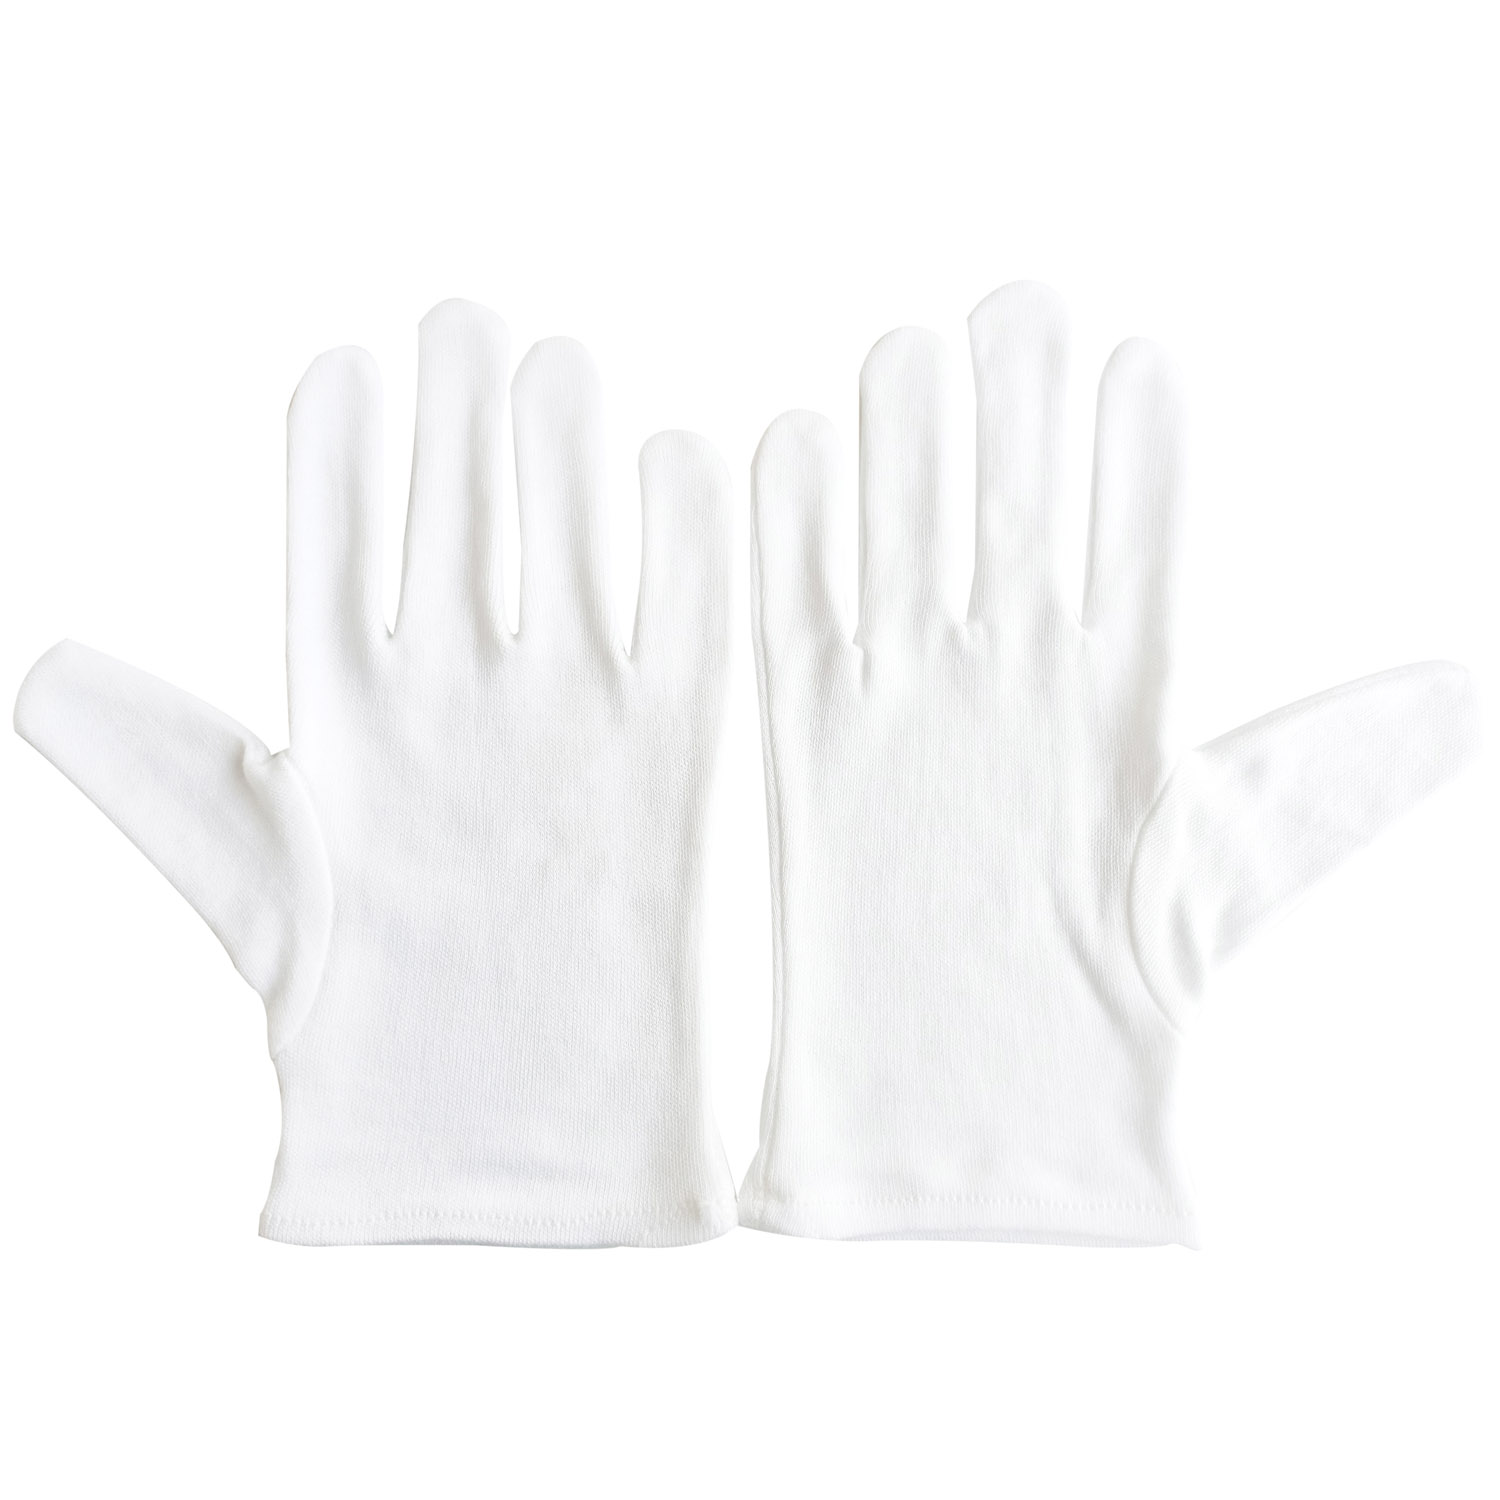 CAC China GLCT-1L Service Glove Cotton White L 12-PC - 1 dozen